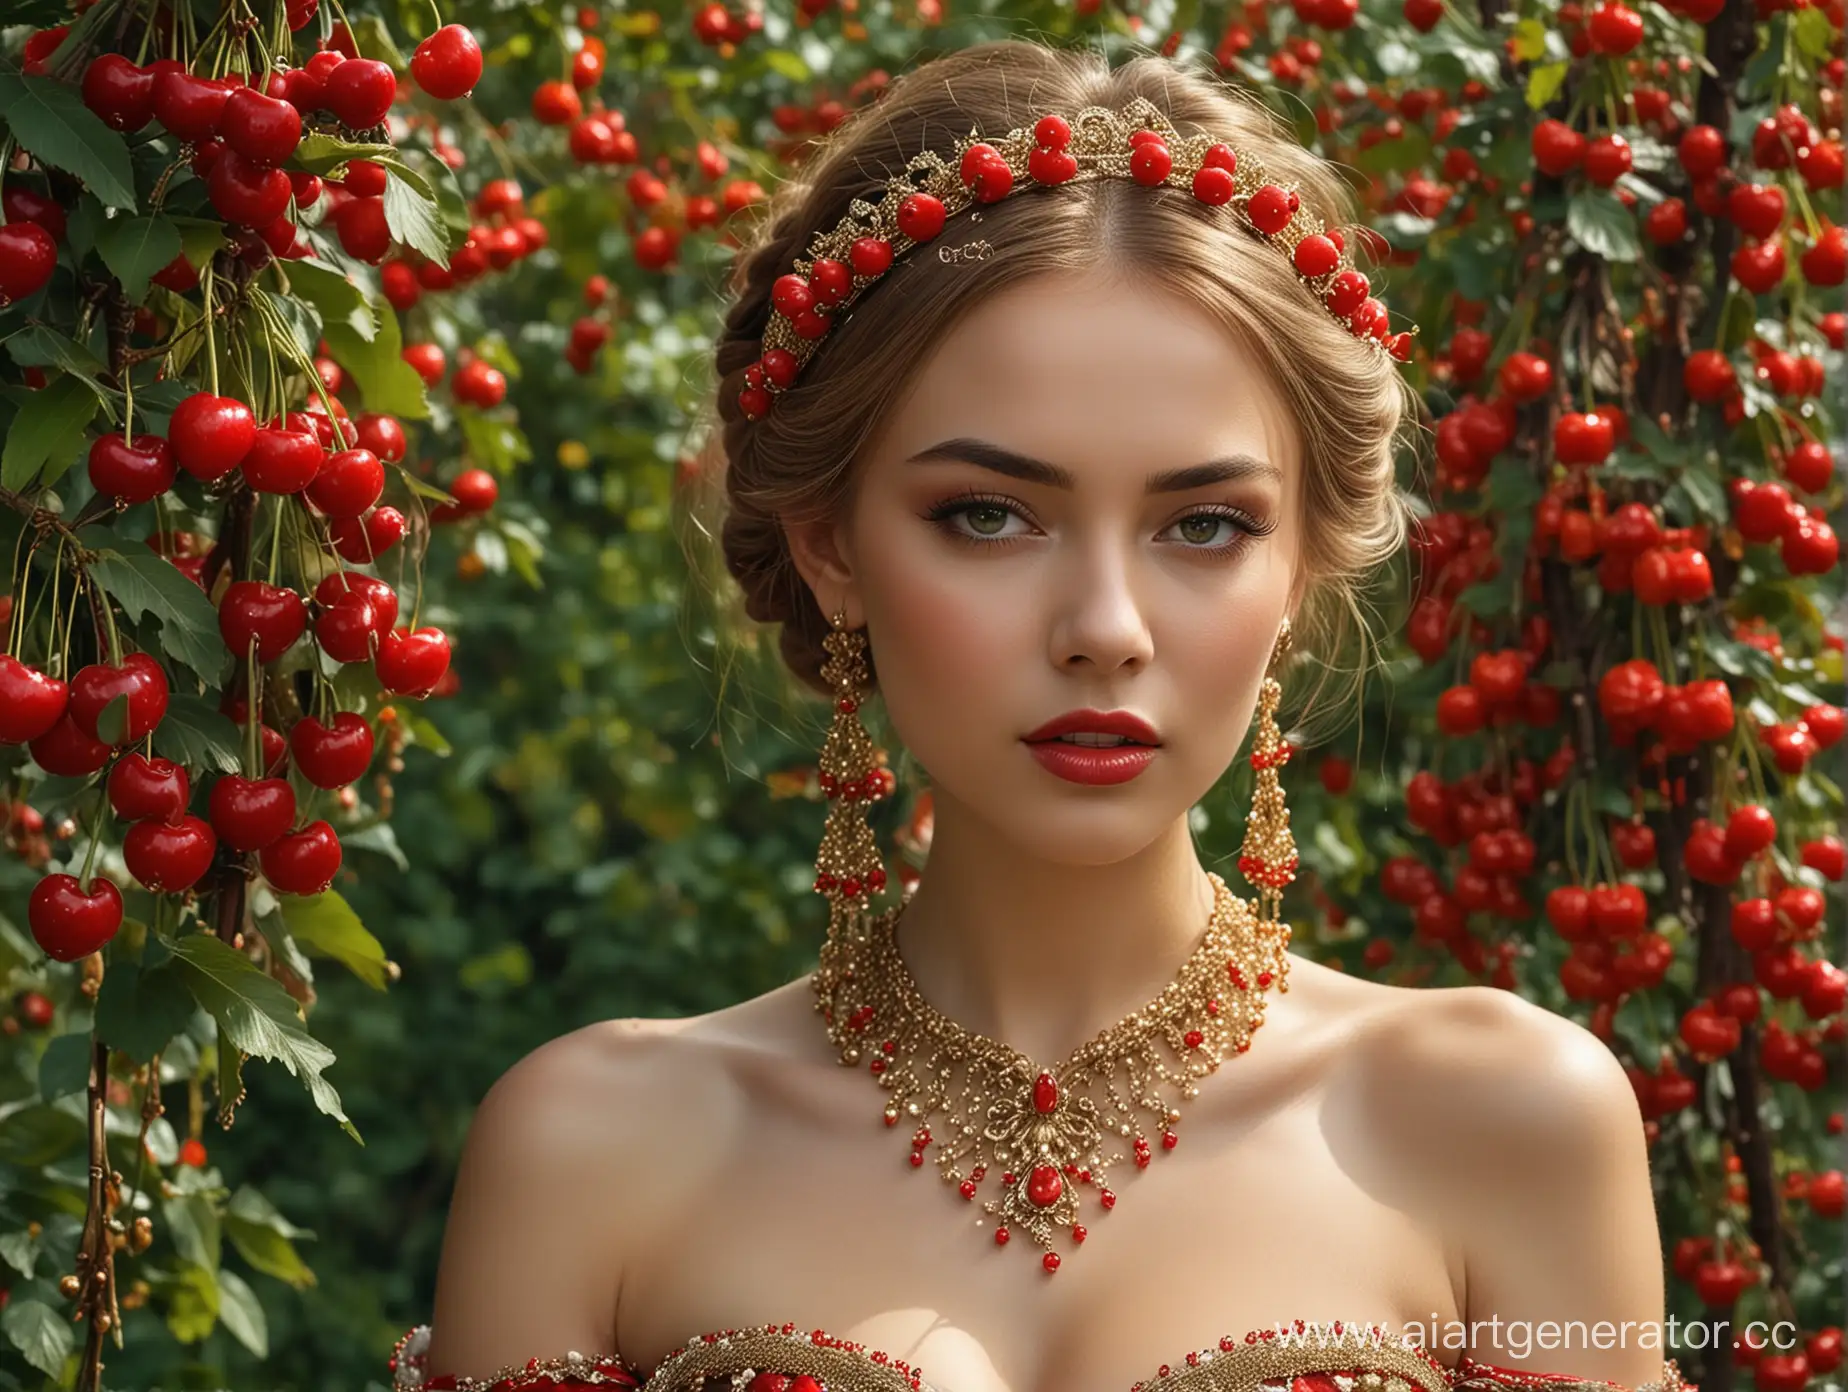 Sensual-Russian-Beauty-in-FairyTale-Cherry-Garden-with-Kokoshnik-and-Gold-Accessories